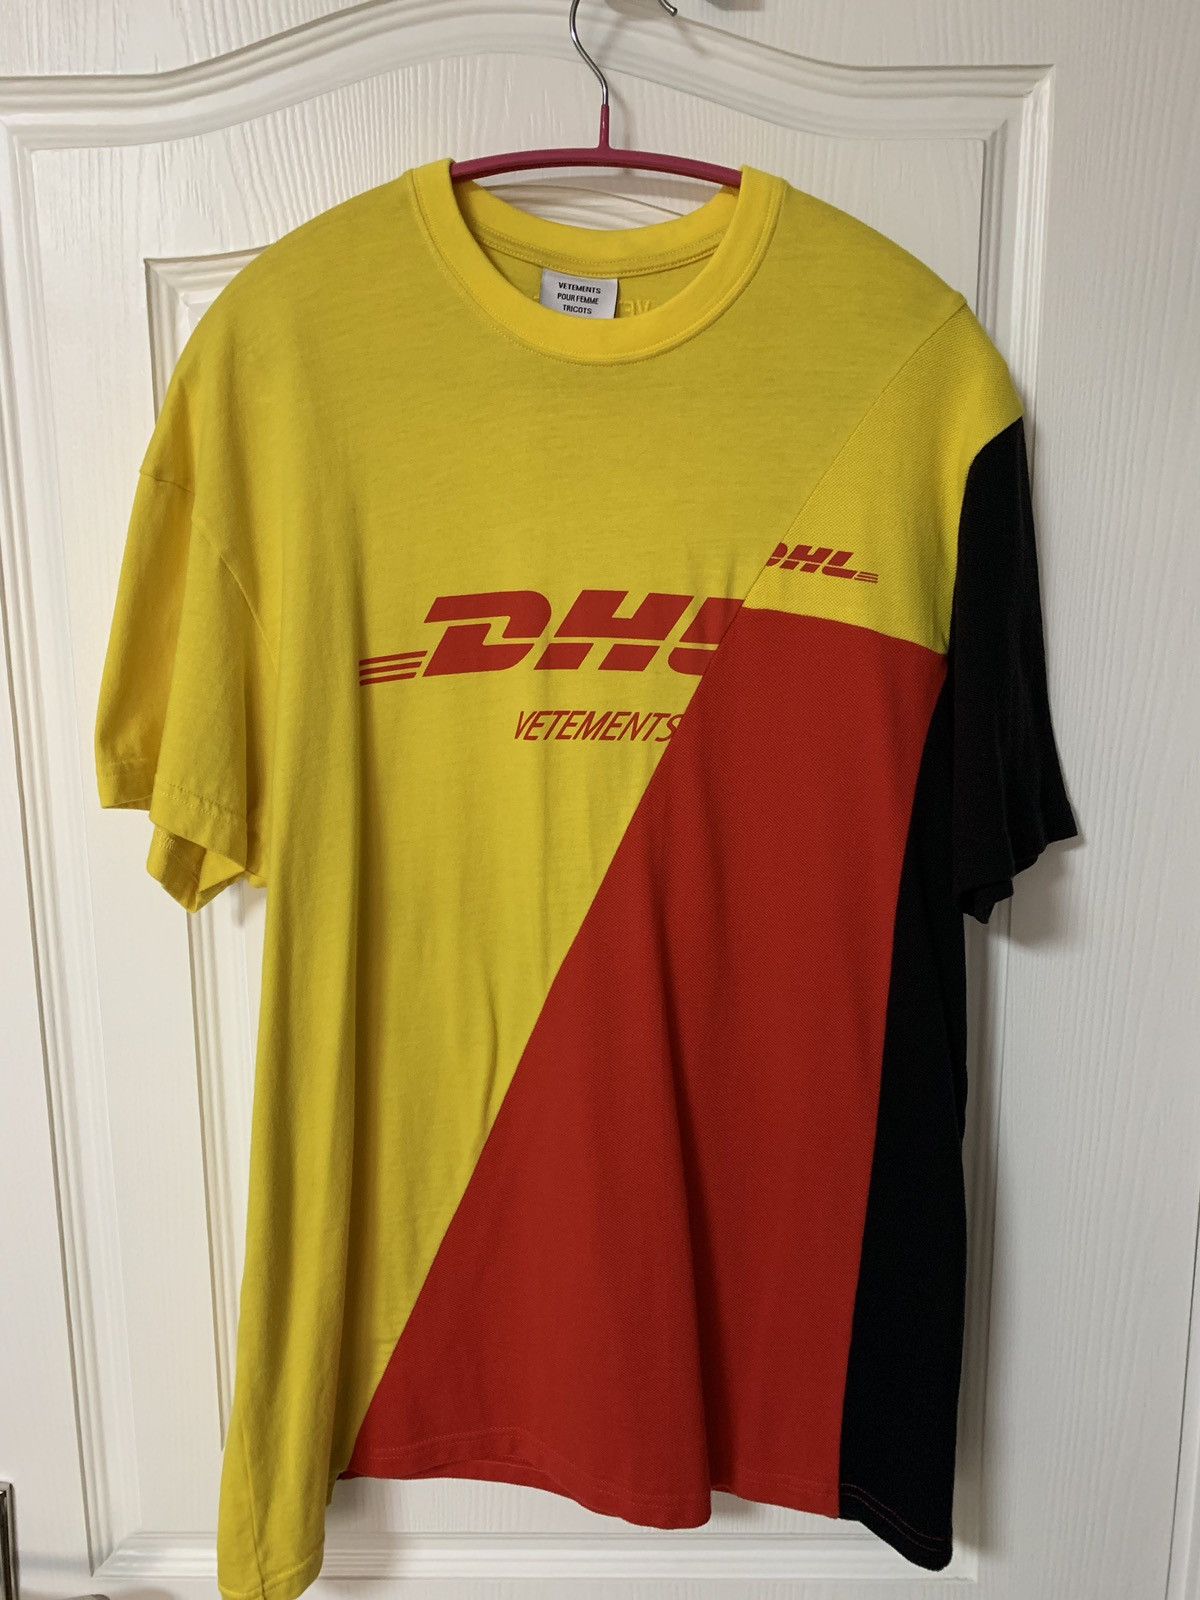 Vetememes DHL t-shirt | Grailed